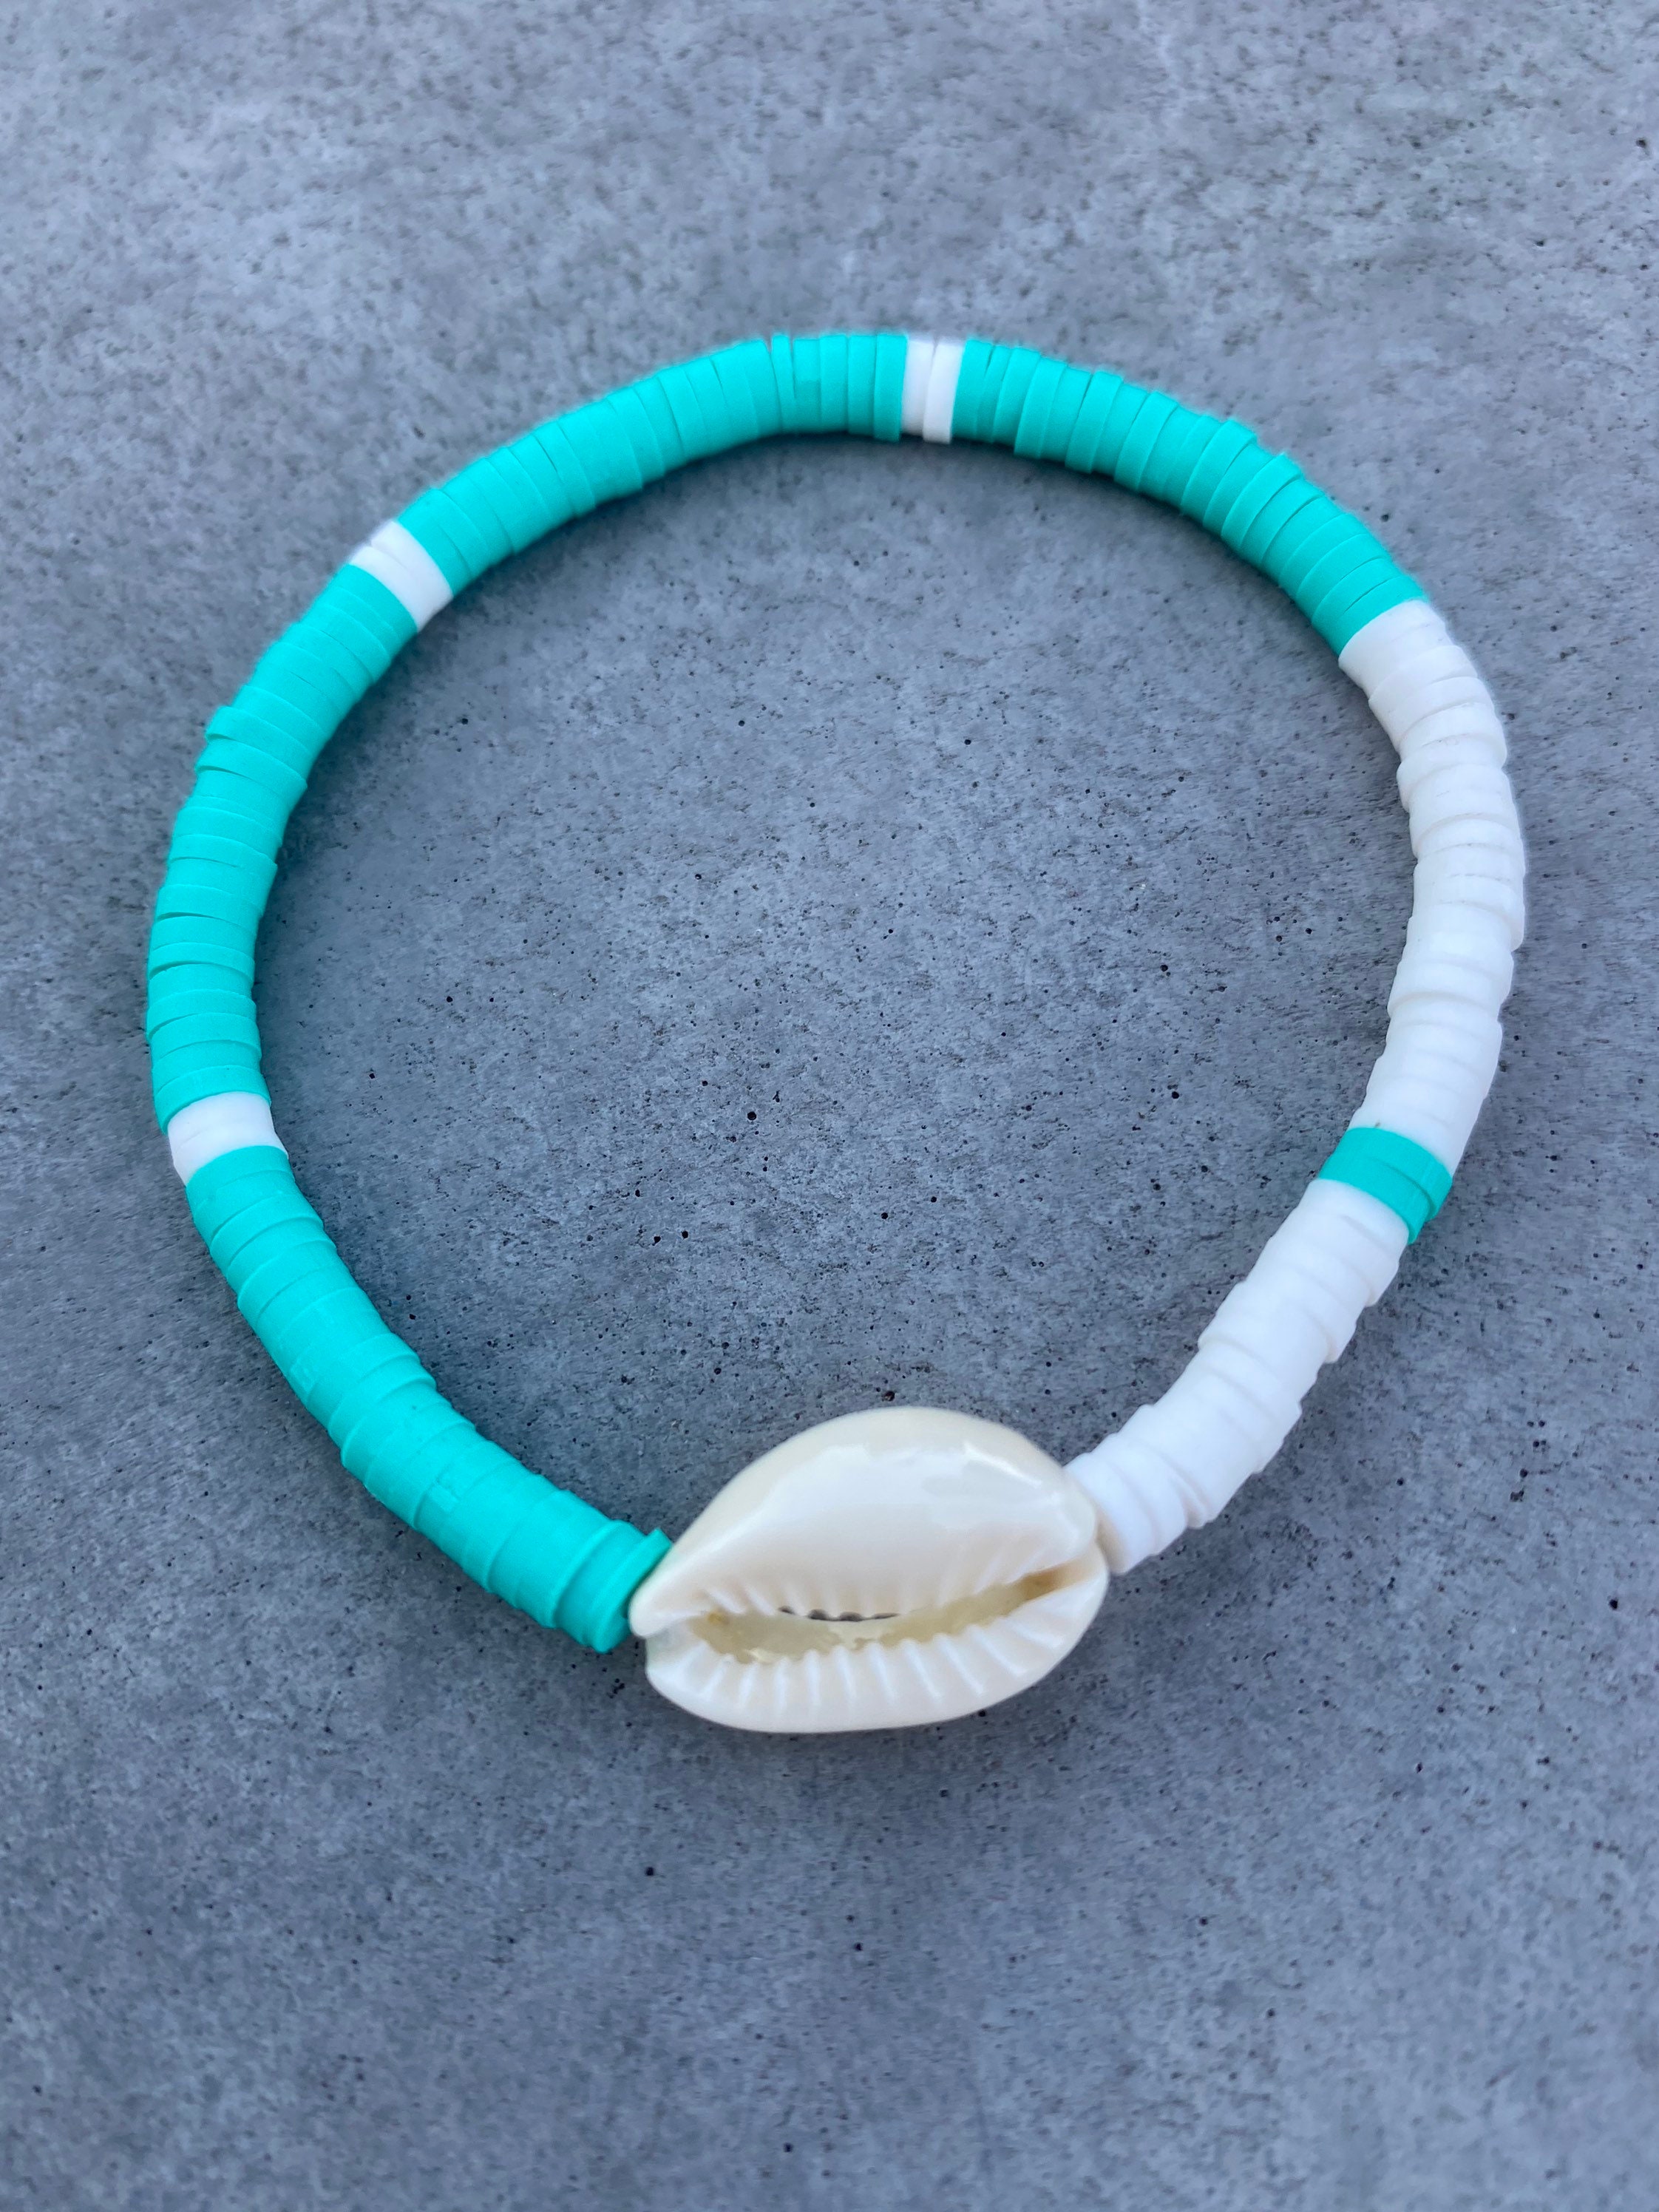 3 Beaded Blue/yellow Bracelets Clay, Heishi & Semi Precious Beads STRETCHY  water Proof 